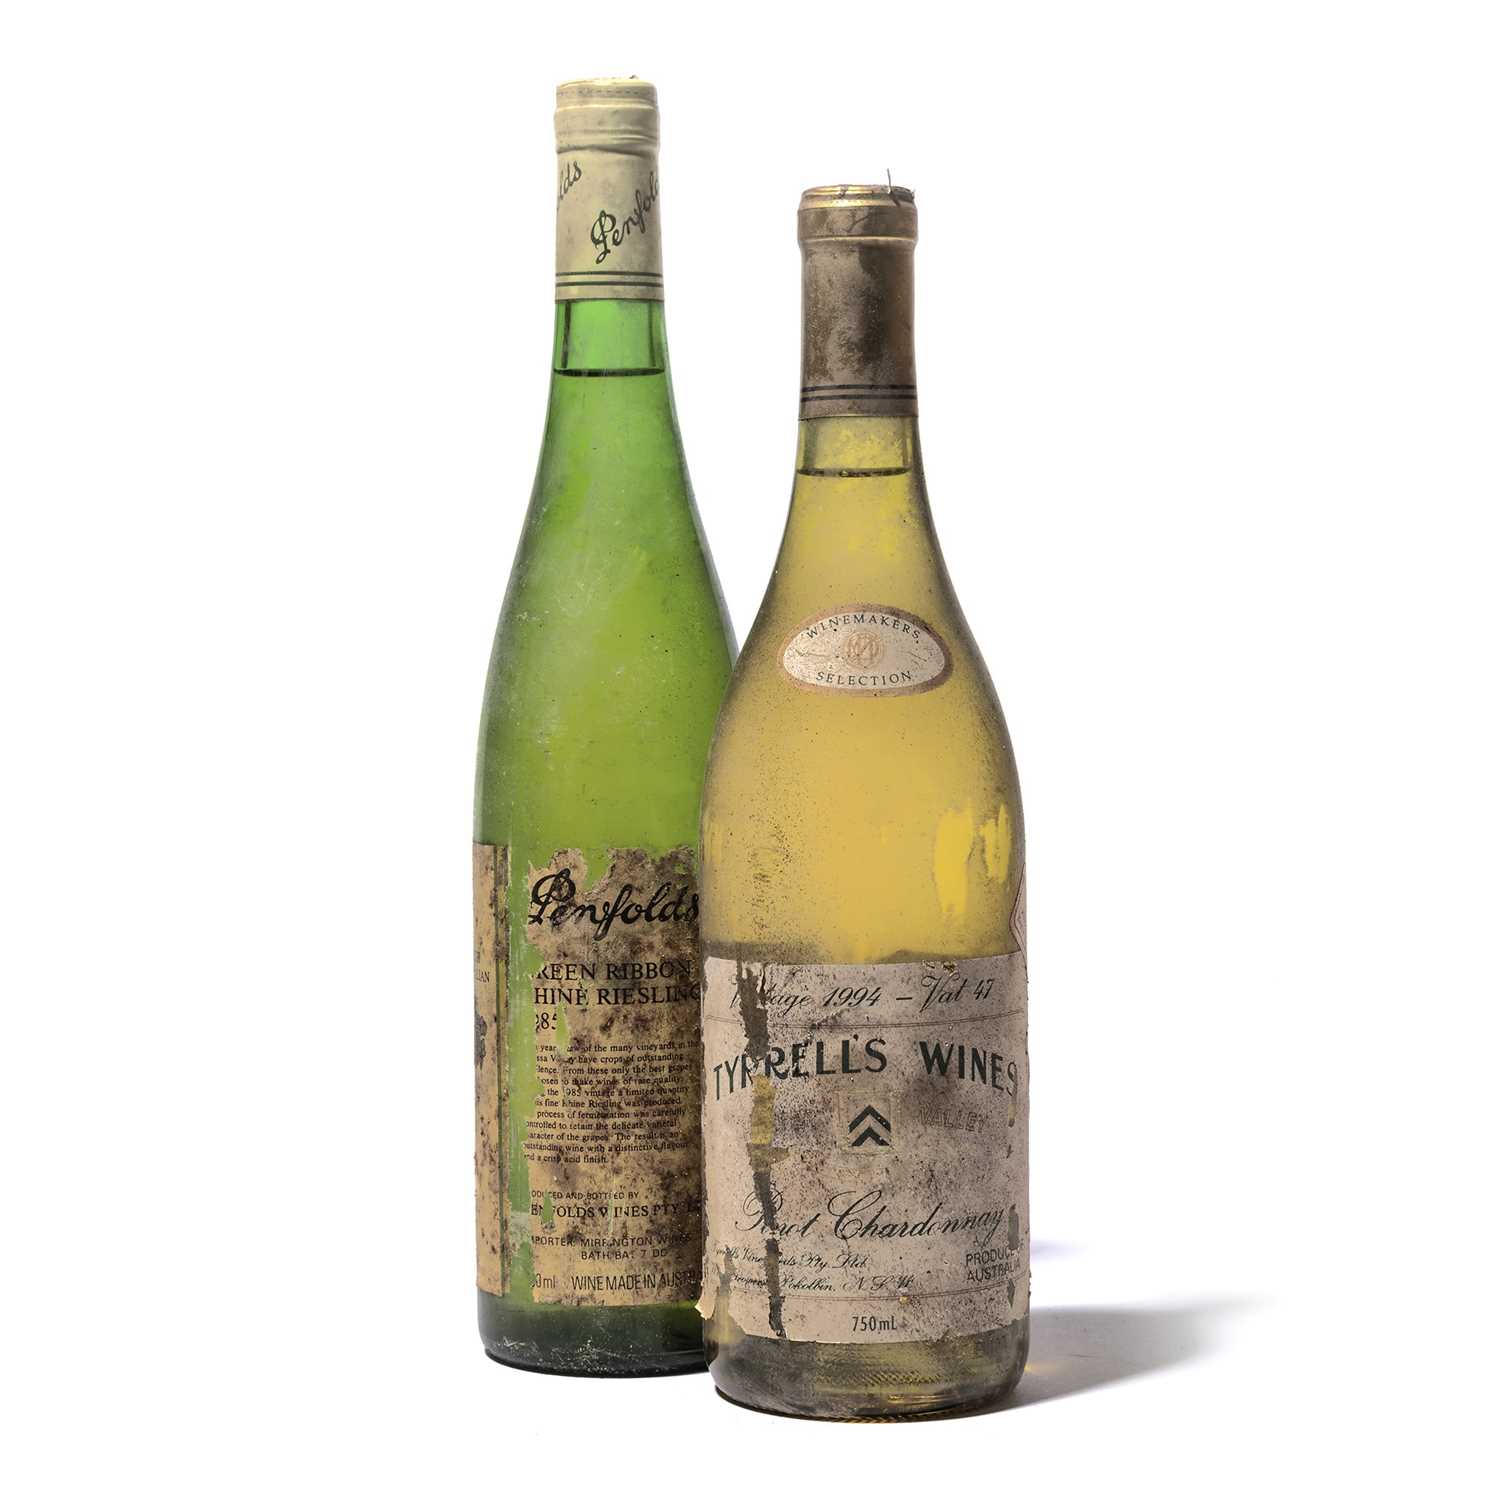 Lot 148 - 19 bottles Mixed Australian White Wines